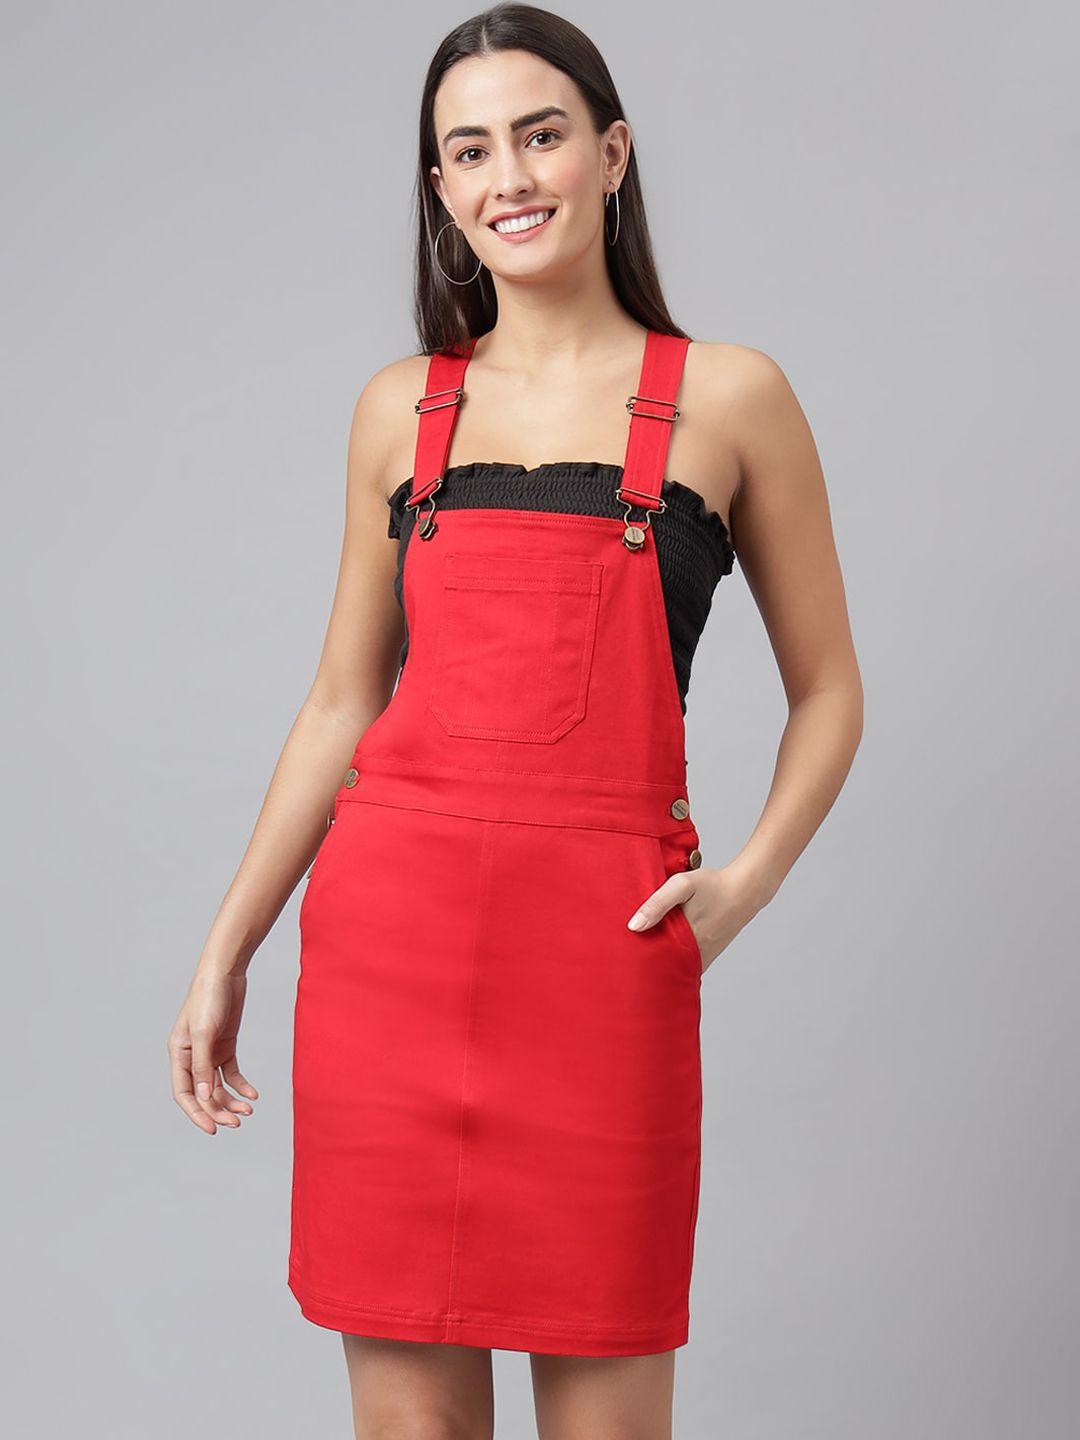 finsbury london red cotton pinafore dress